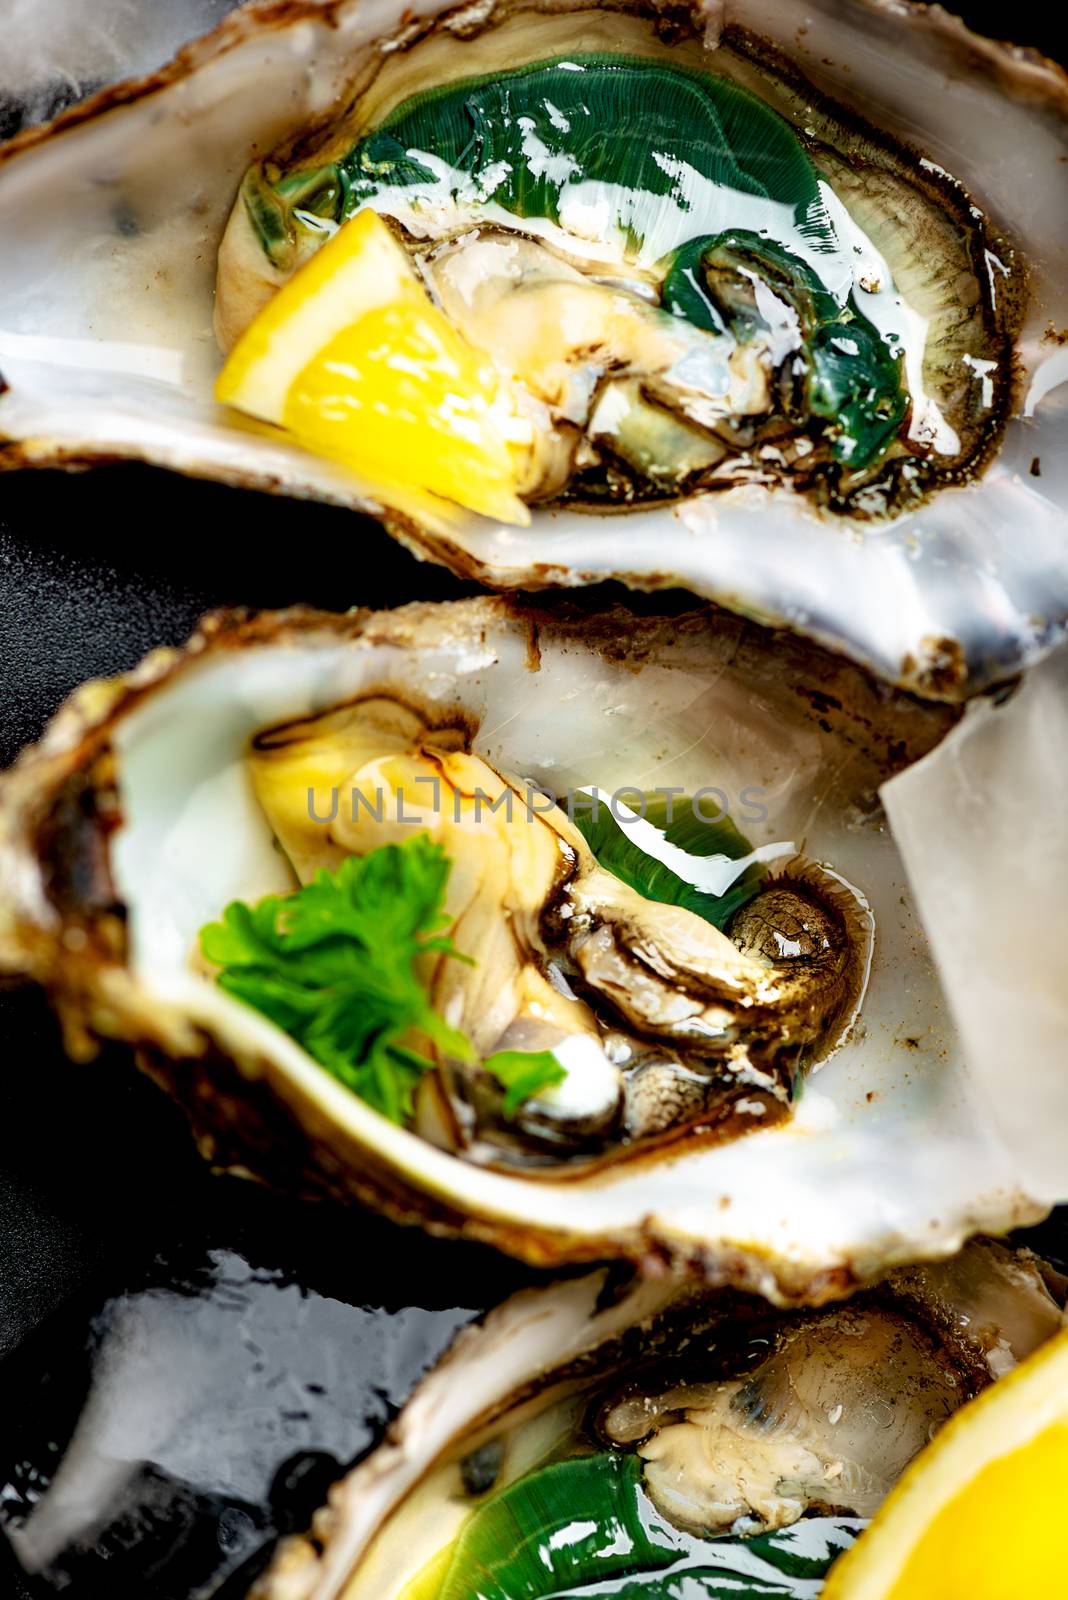 Raw opened oysters by Nanisimova